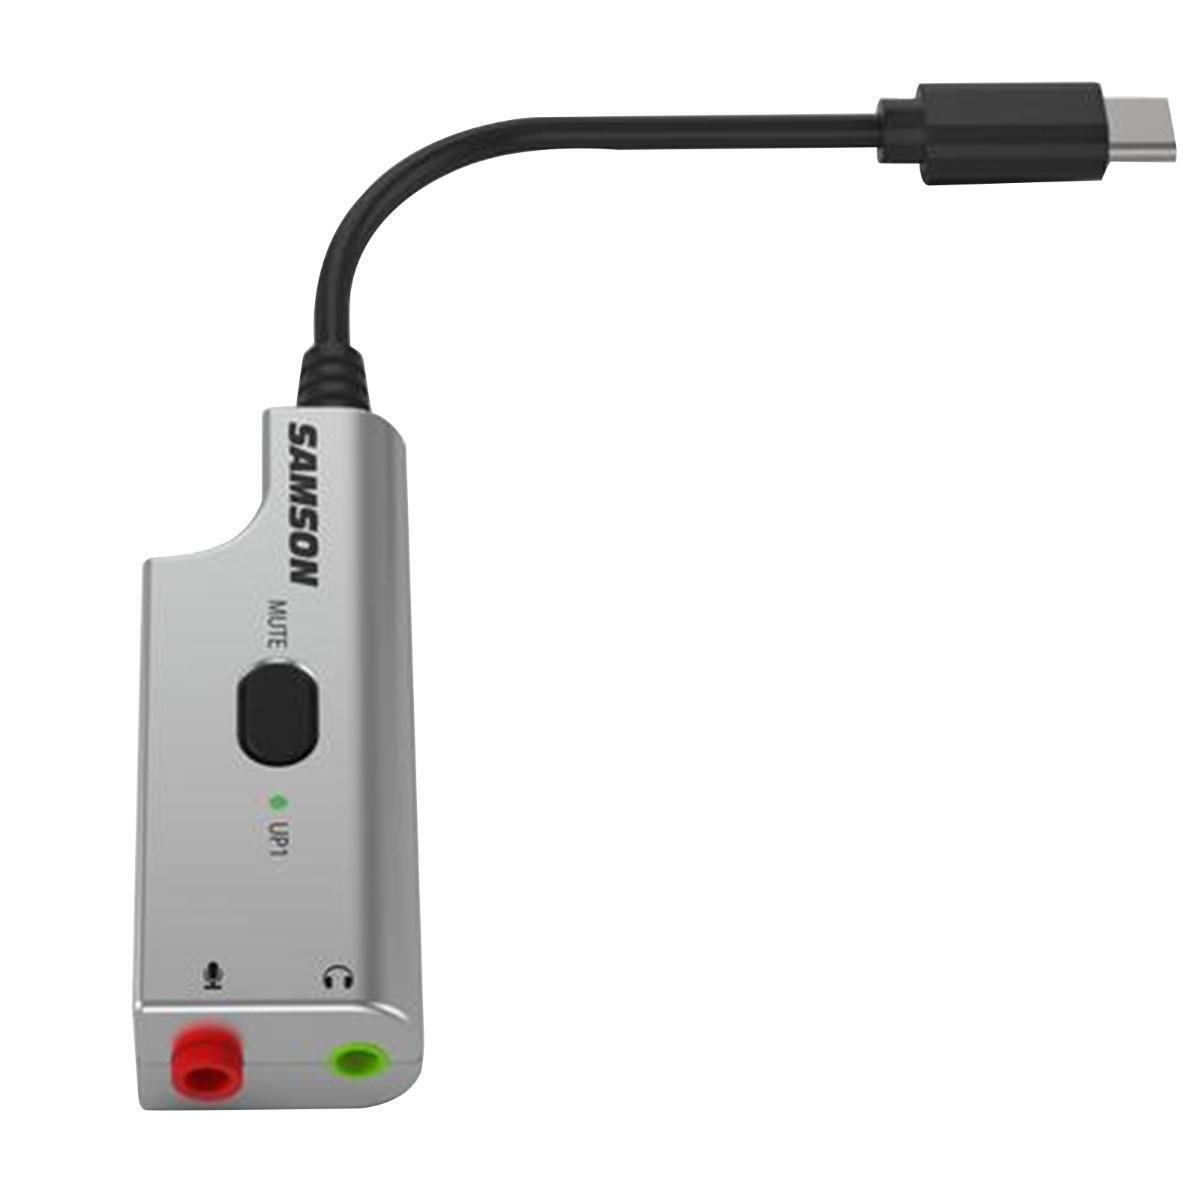 Samson SALMU1  Compact Broadcast Lavalier Microphone with USB Adapter